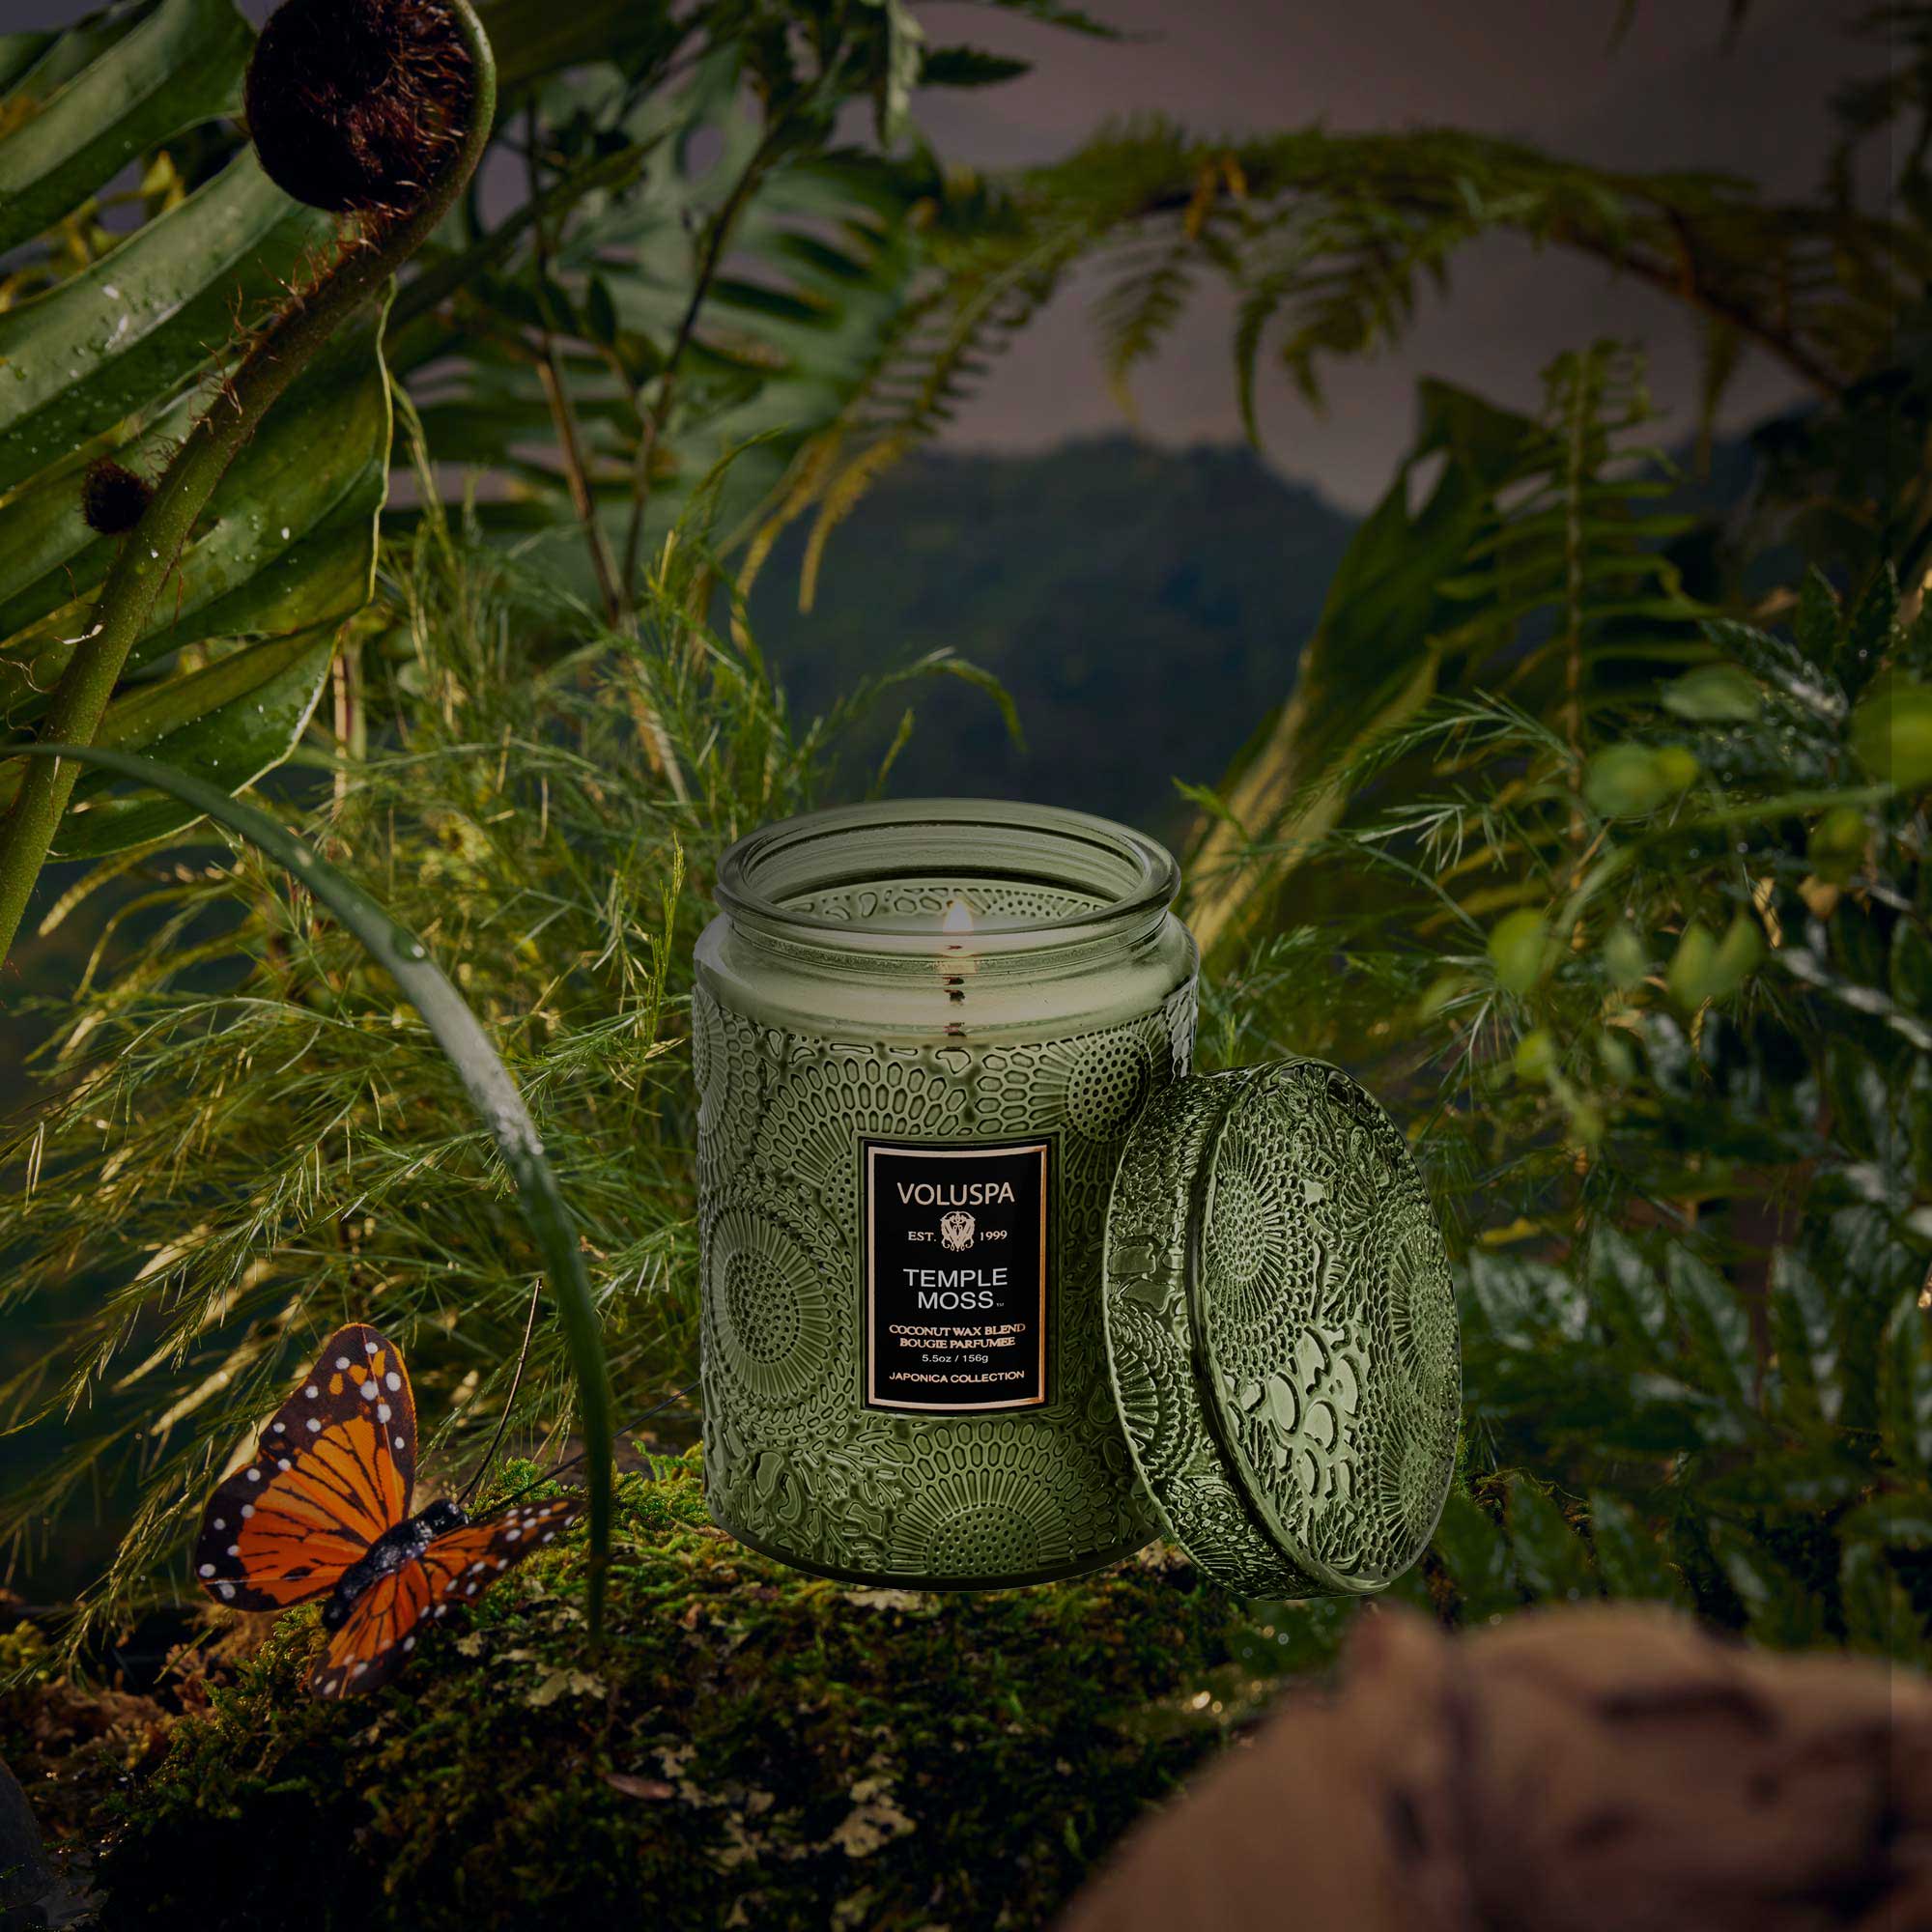 Voluspa Small Jar Candle / Temple Moss